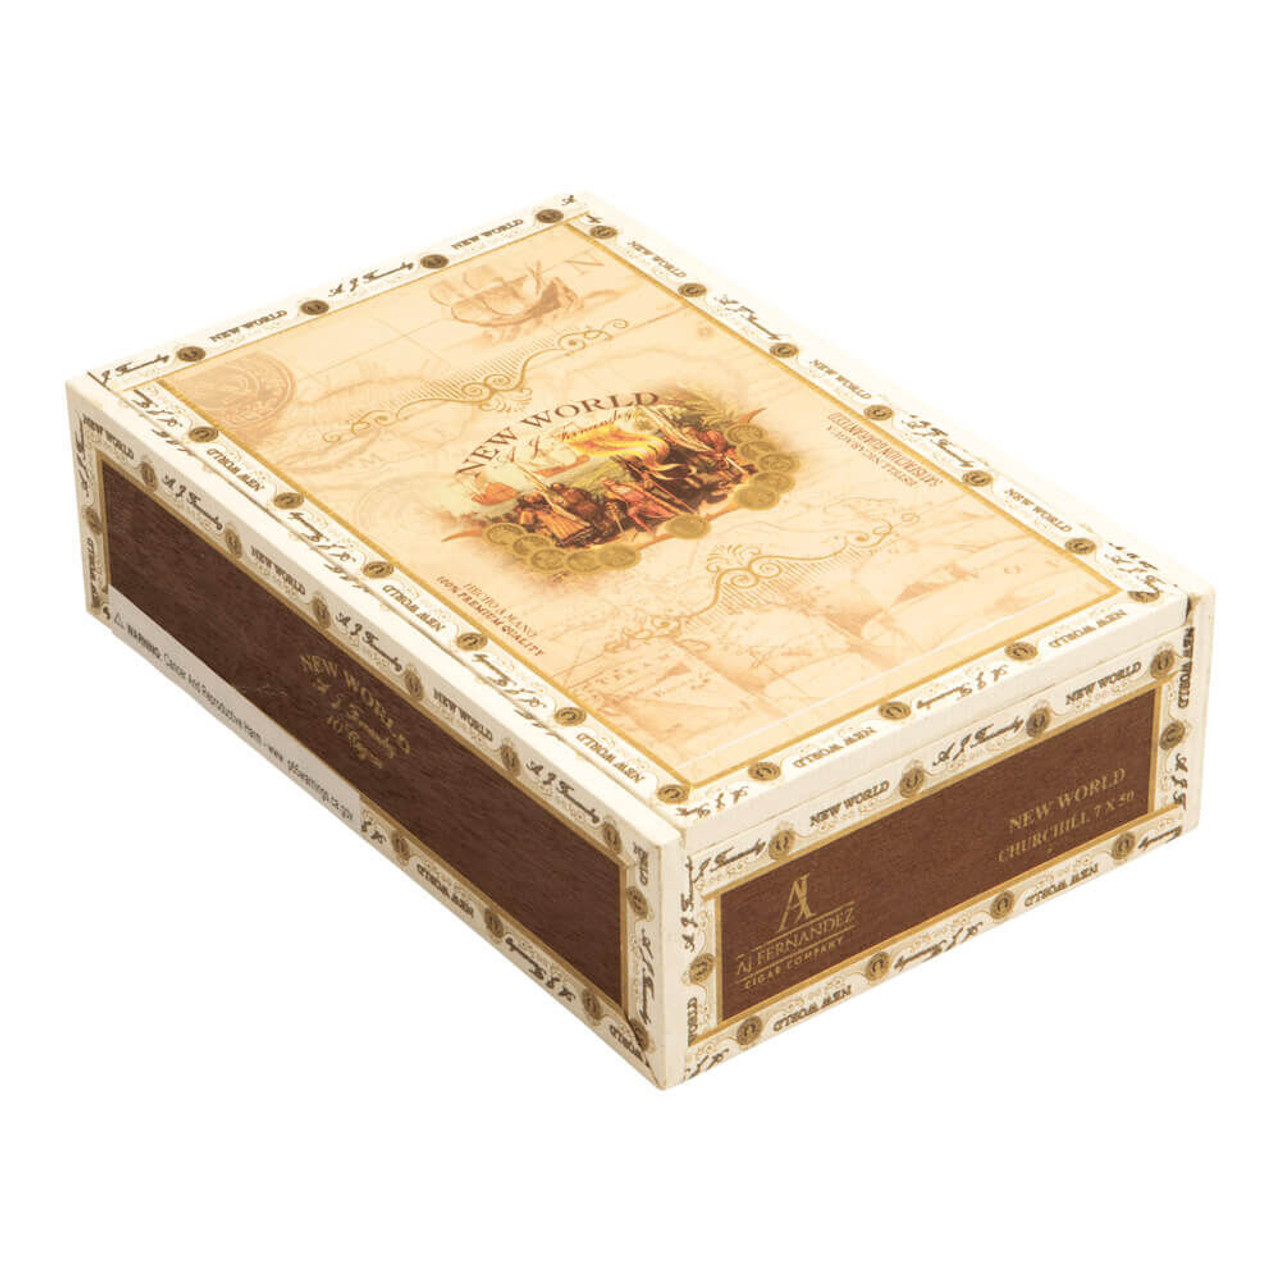 New World Connecticut by AJ Fernandez Churchill Cigars - 7 x 55 (Box of 10) *Box